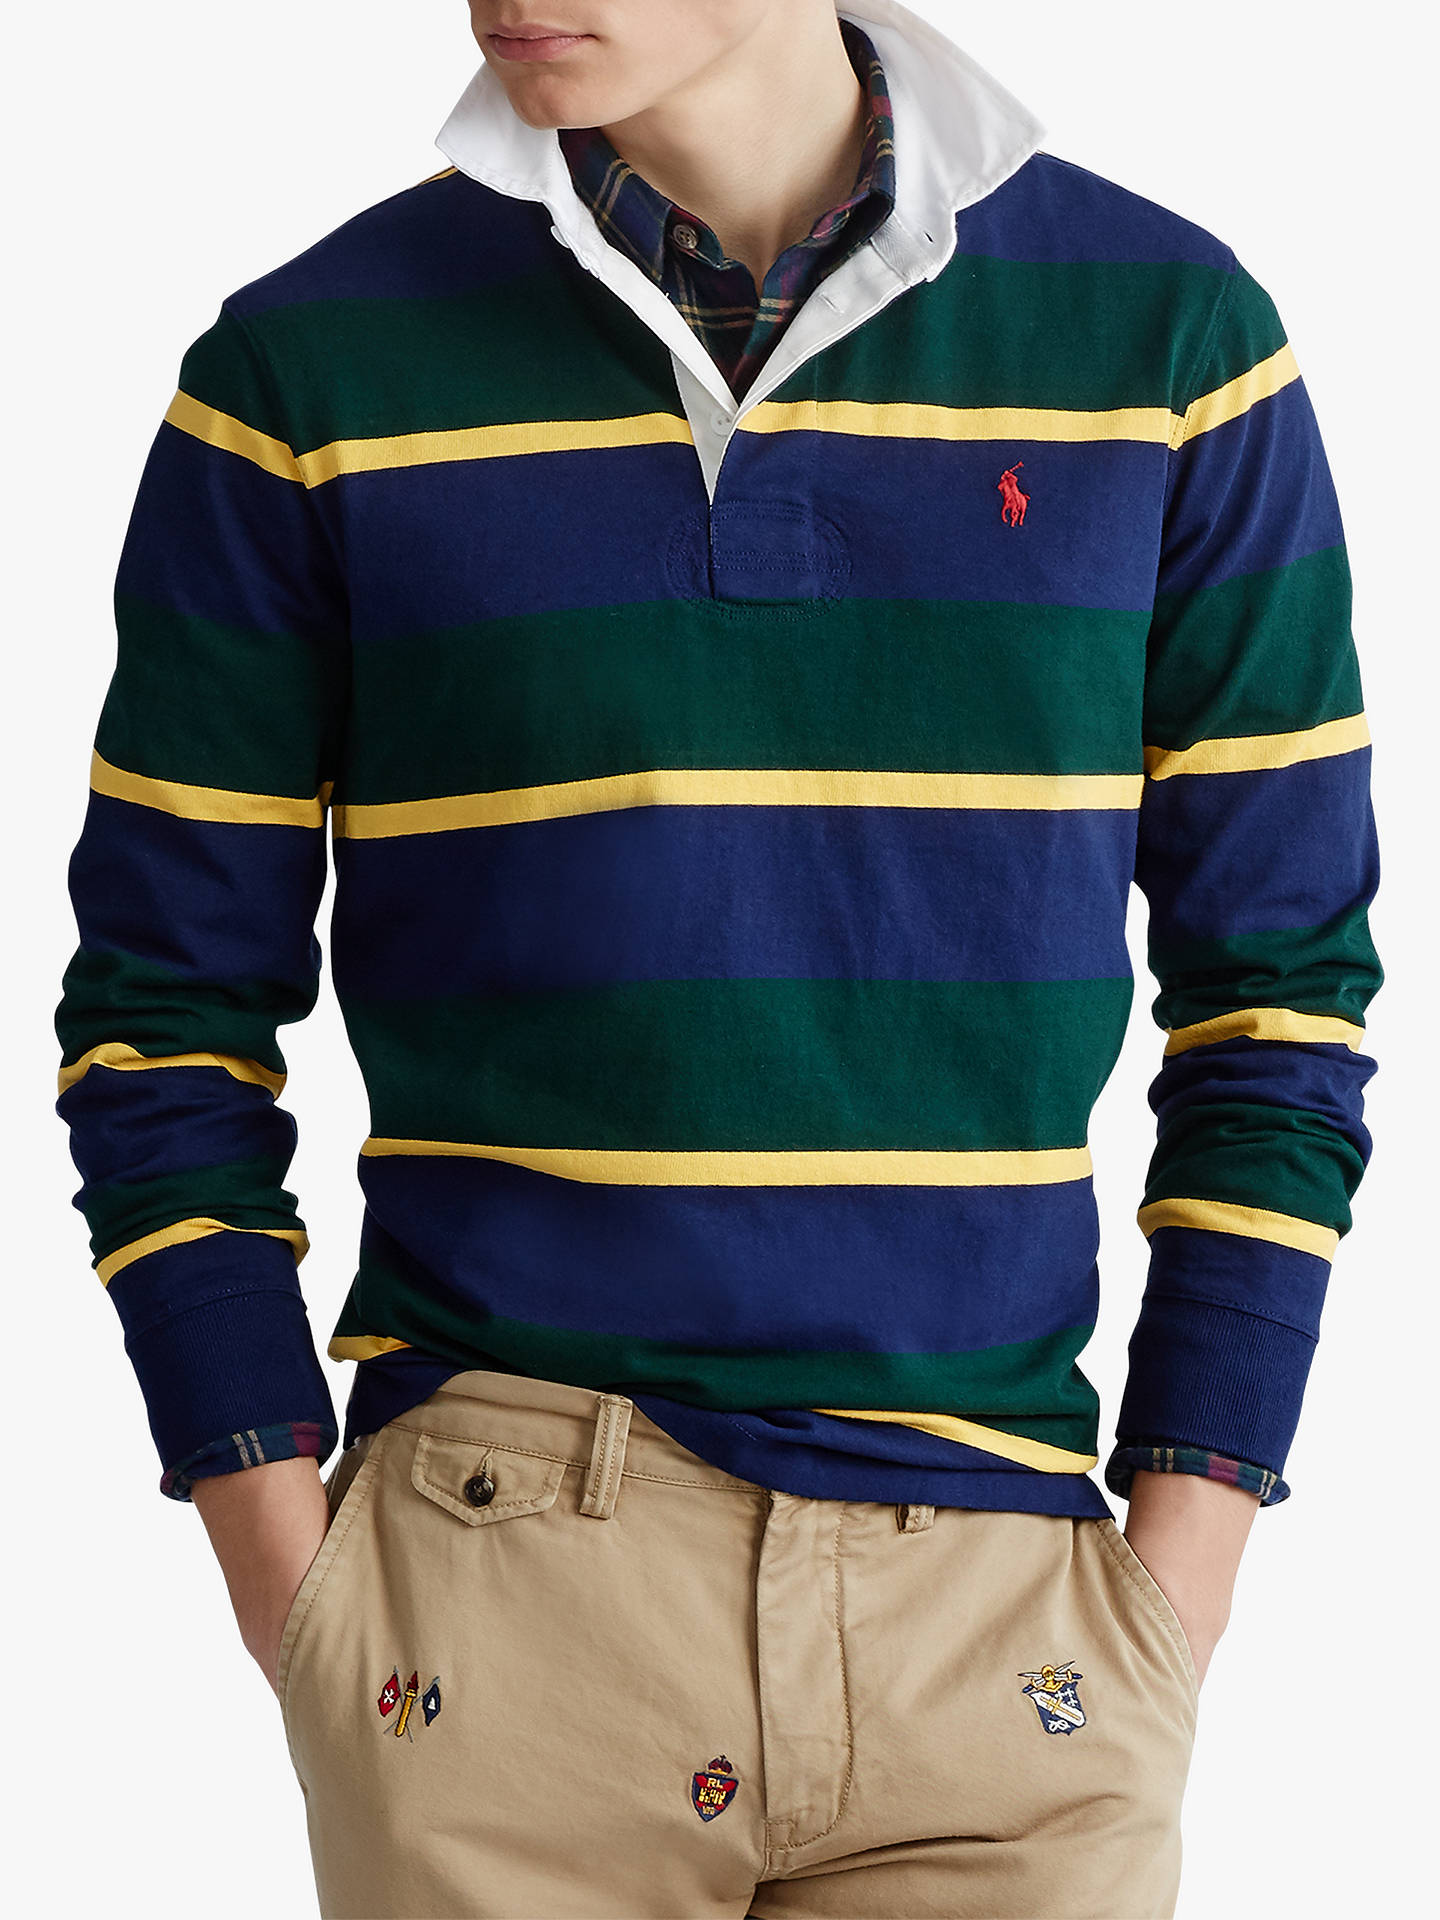 Polo Ralph Lauren Stripe Rugby Shirt, College Green Multi at John Lewis ...